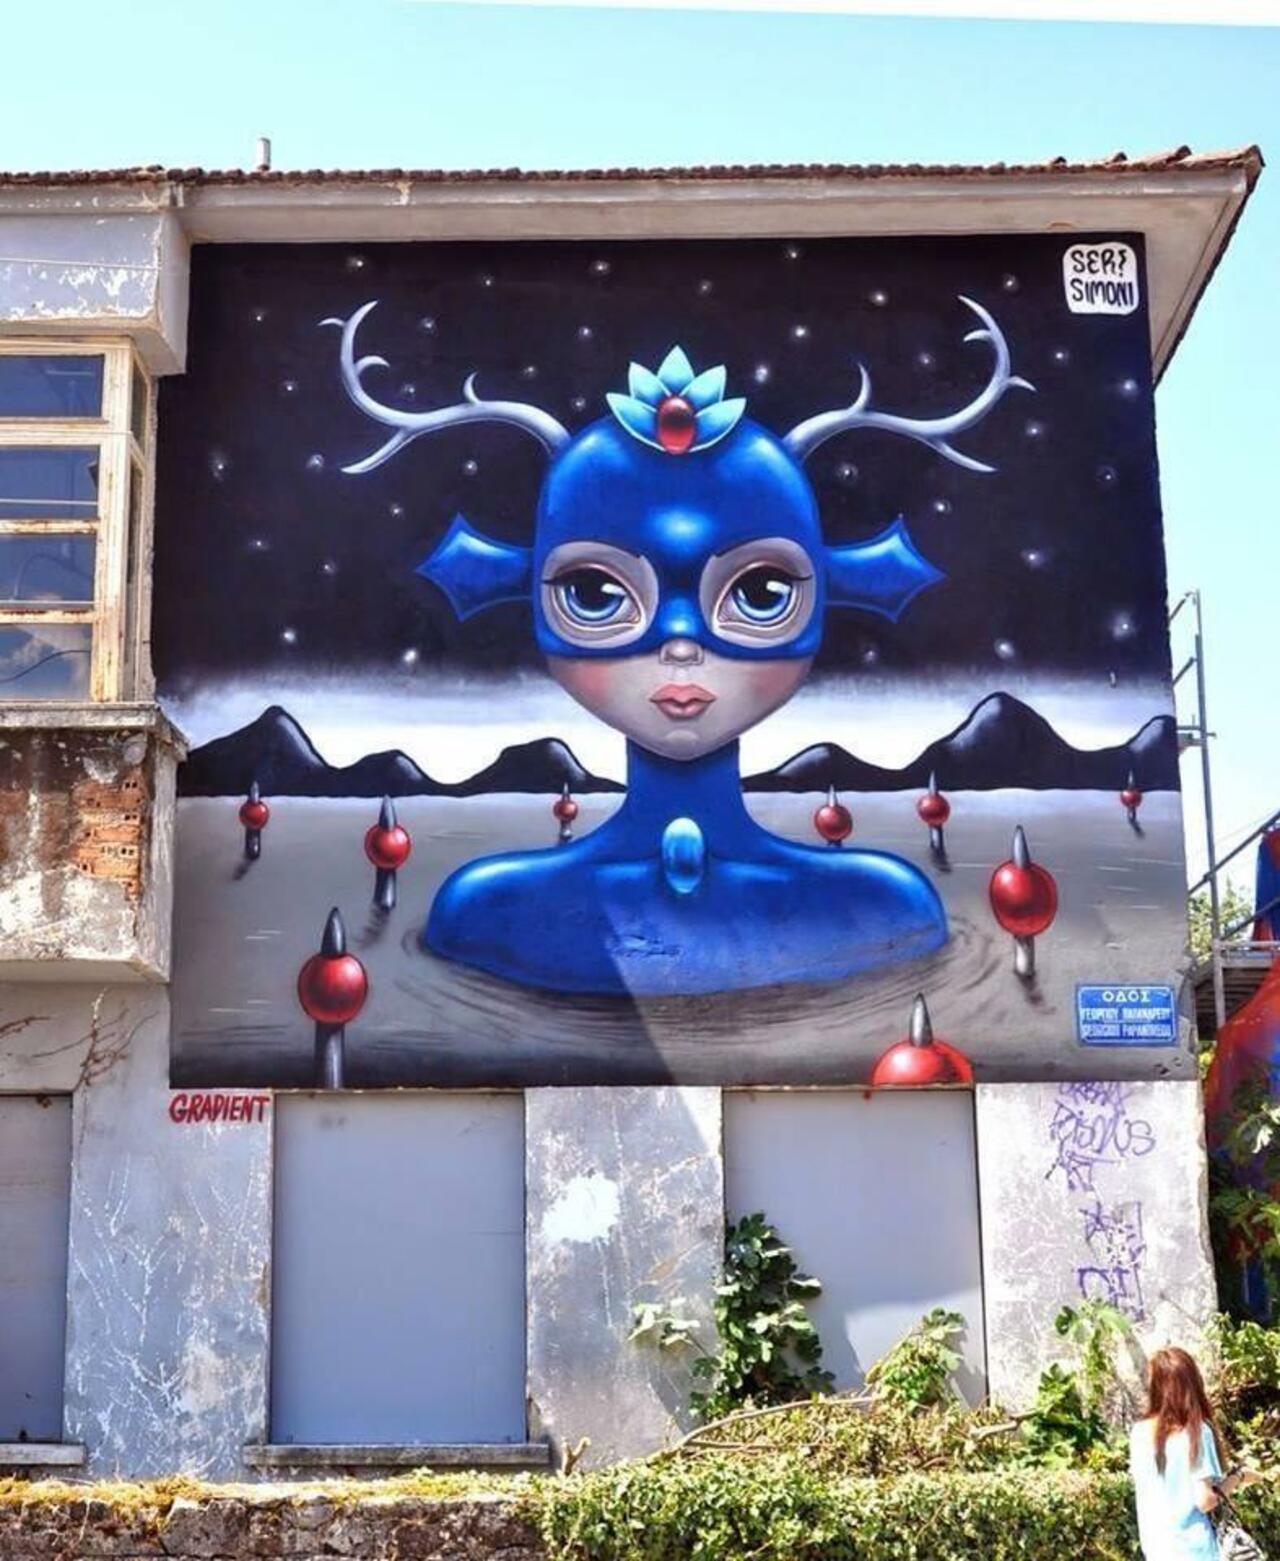 RT @designopinion: Simoni Fontana & Argiris Ser new unique Street Art mural in Loannina, Greece #art #mural #graffiti #streetart http://t.co/7o56KAHmiT